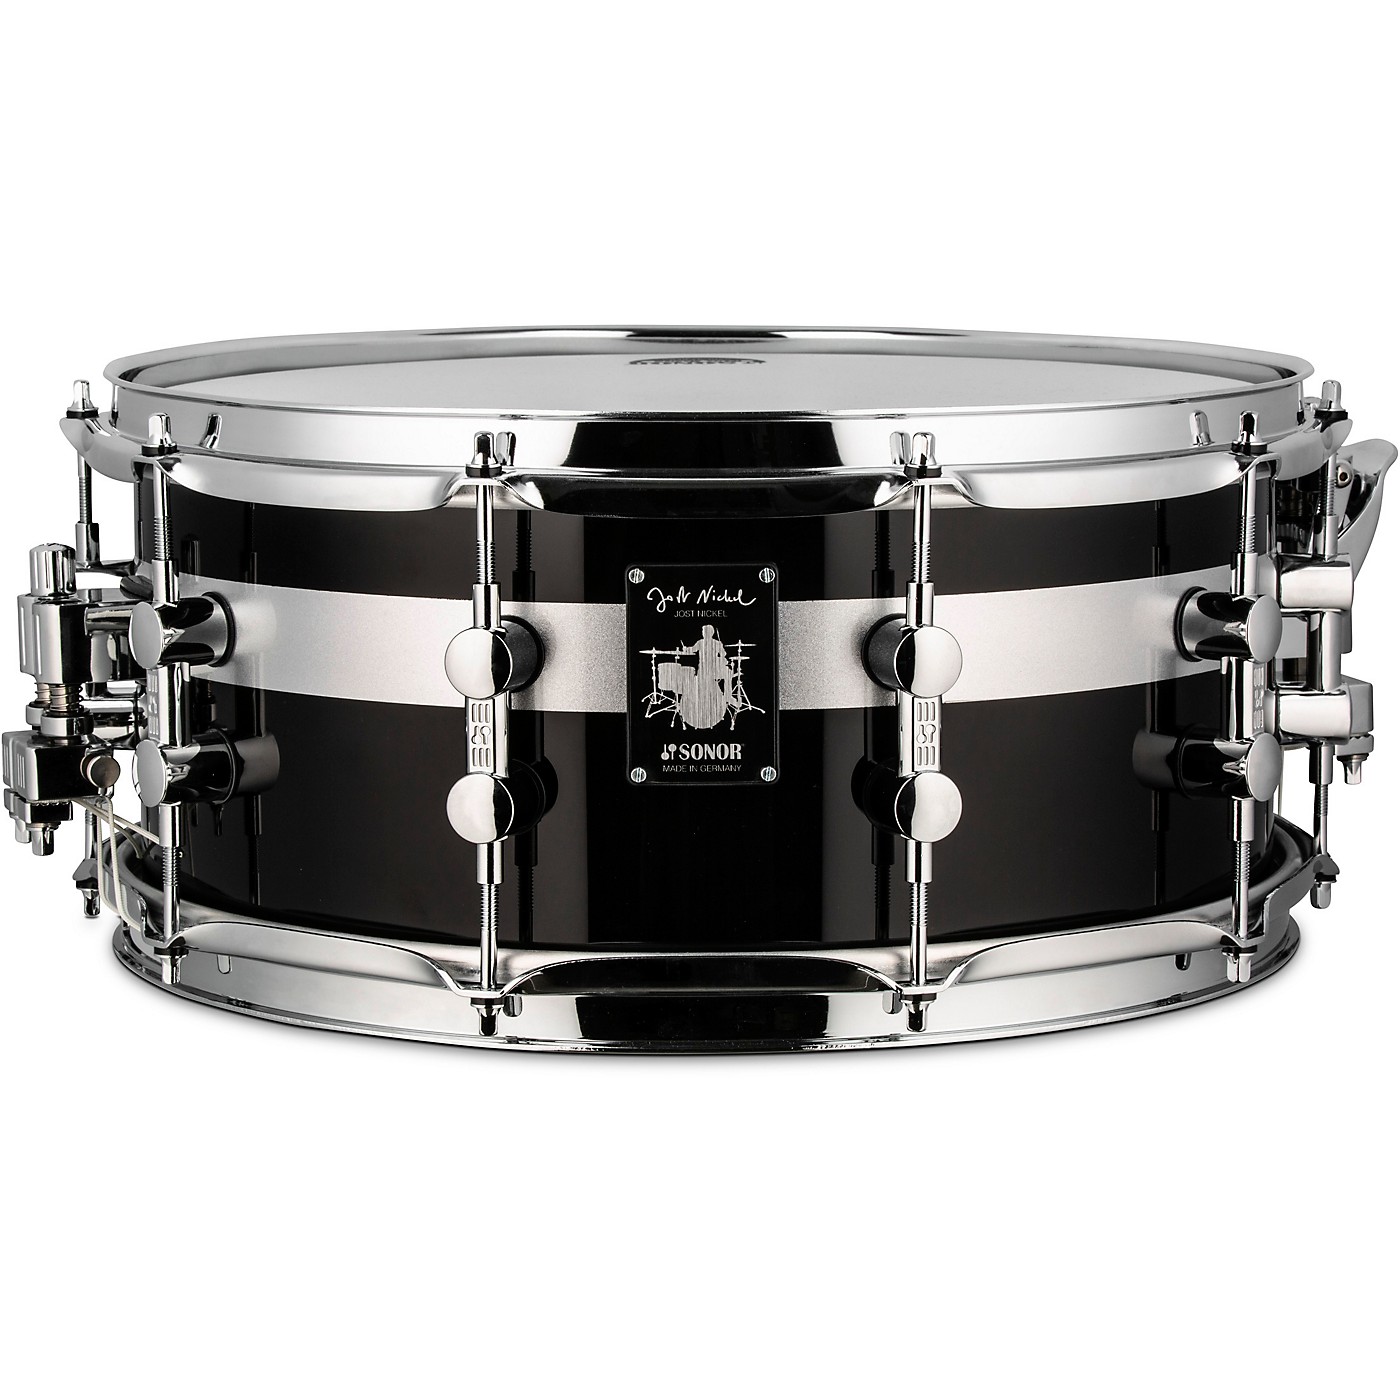 SONOR Jost Nickel Beech Snare Drum, Gloss Black With Stripe, 14x6.5